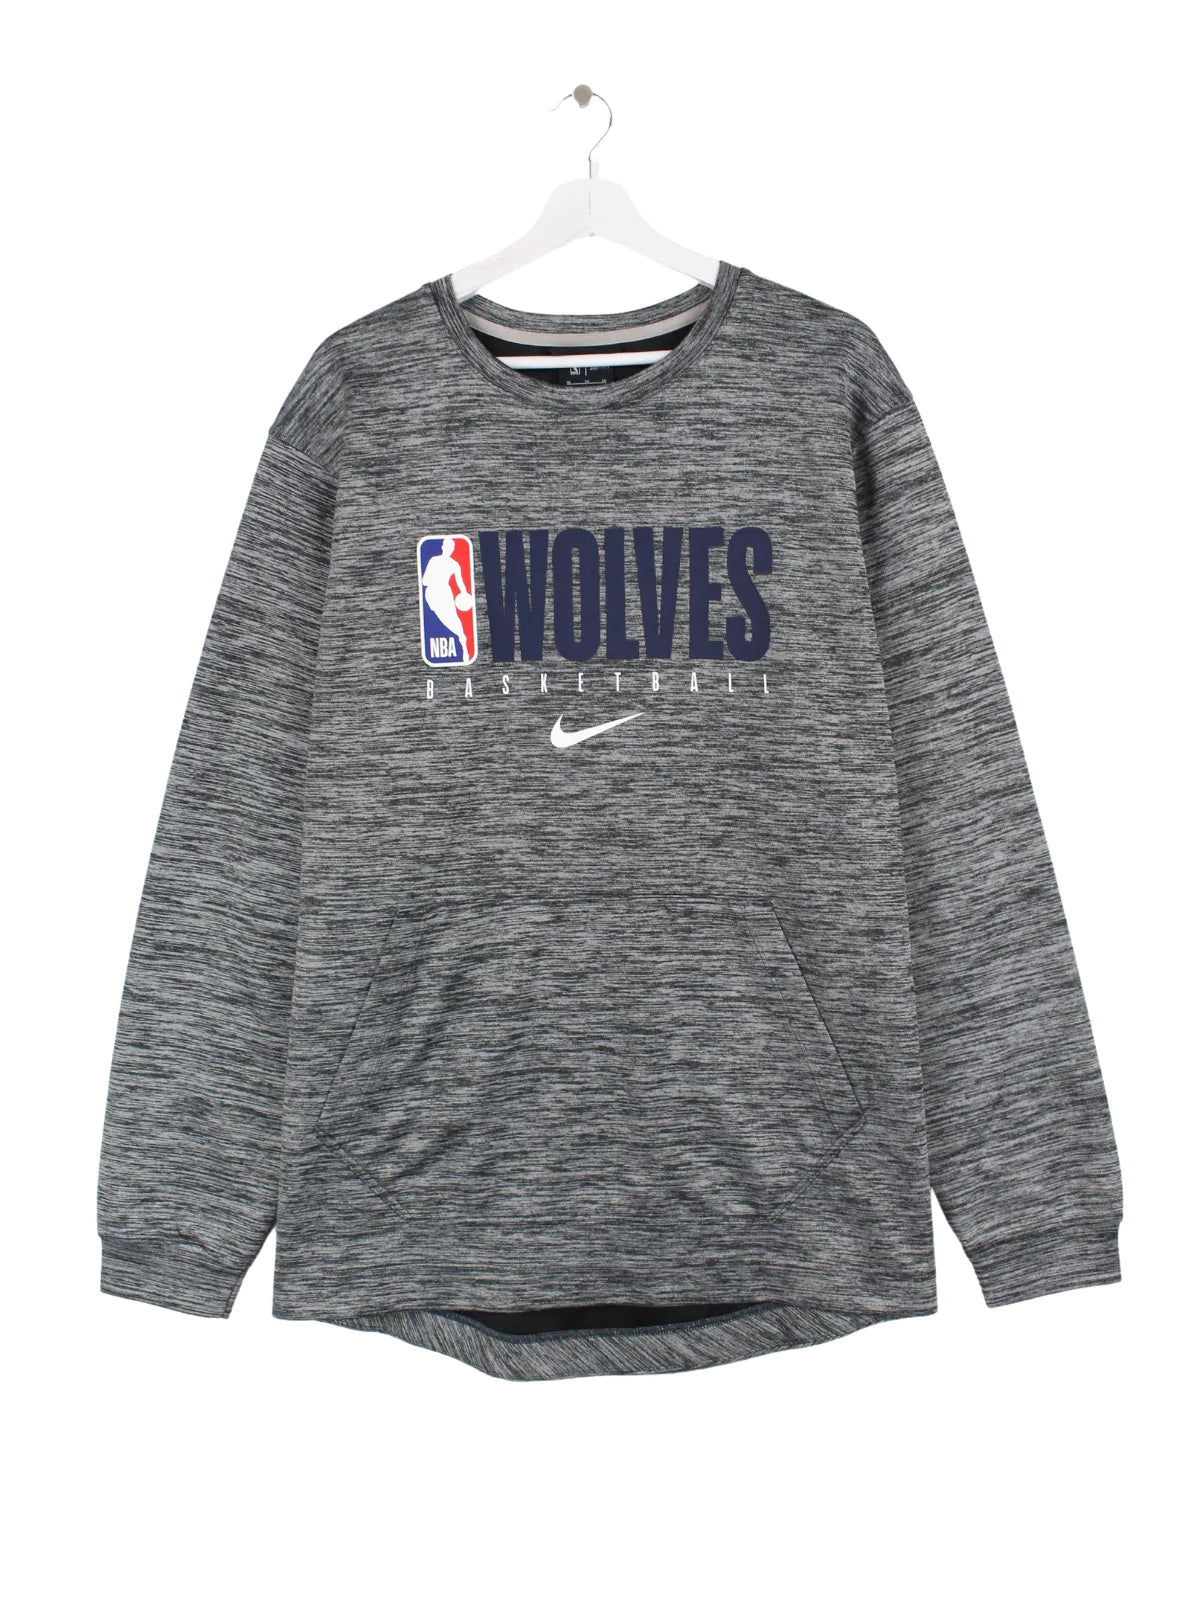 Nike Wolves Center Swoosh Sweater Grau XXL